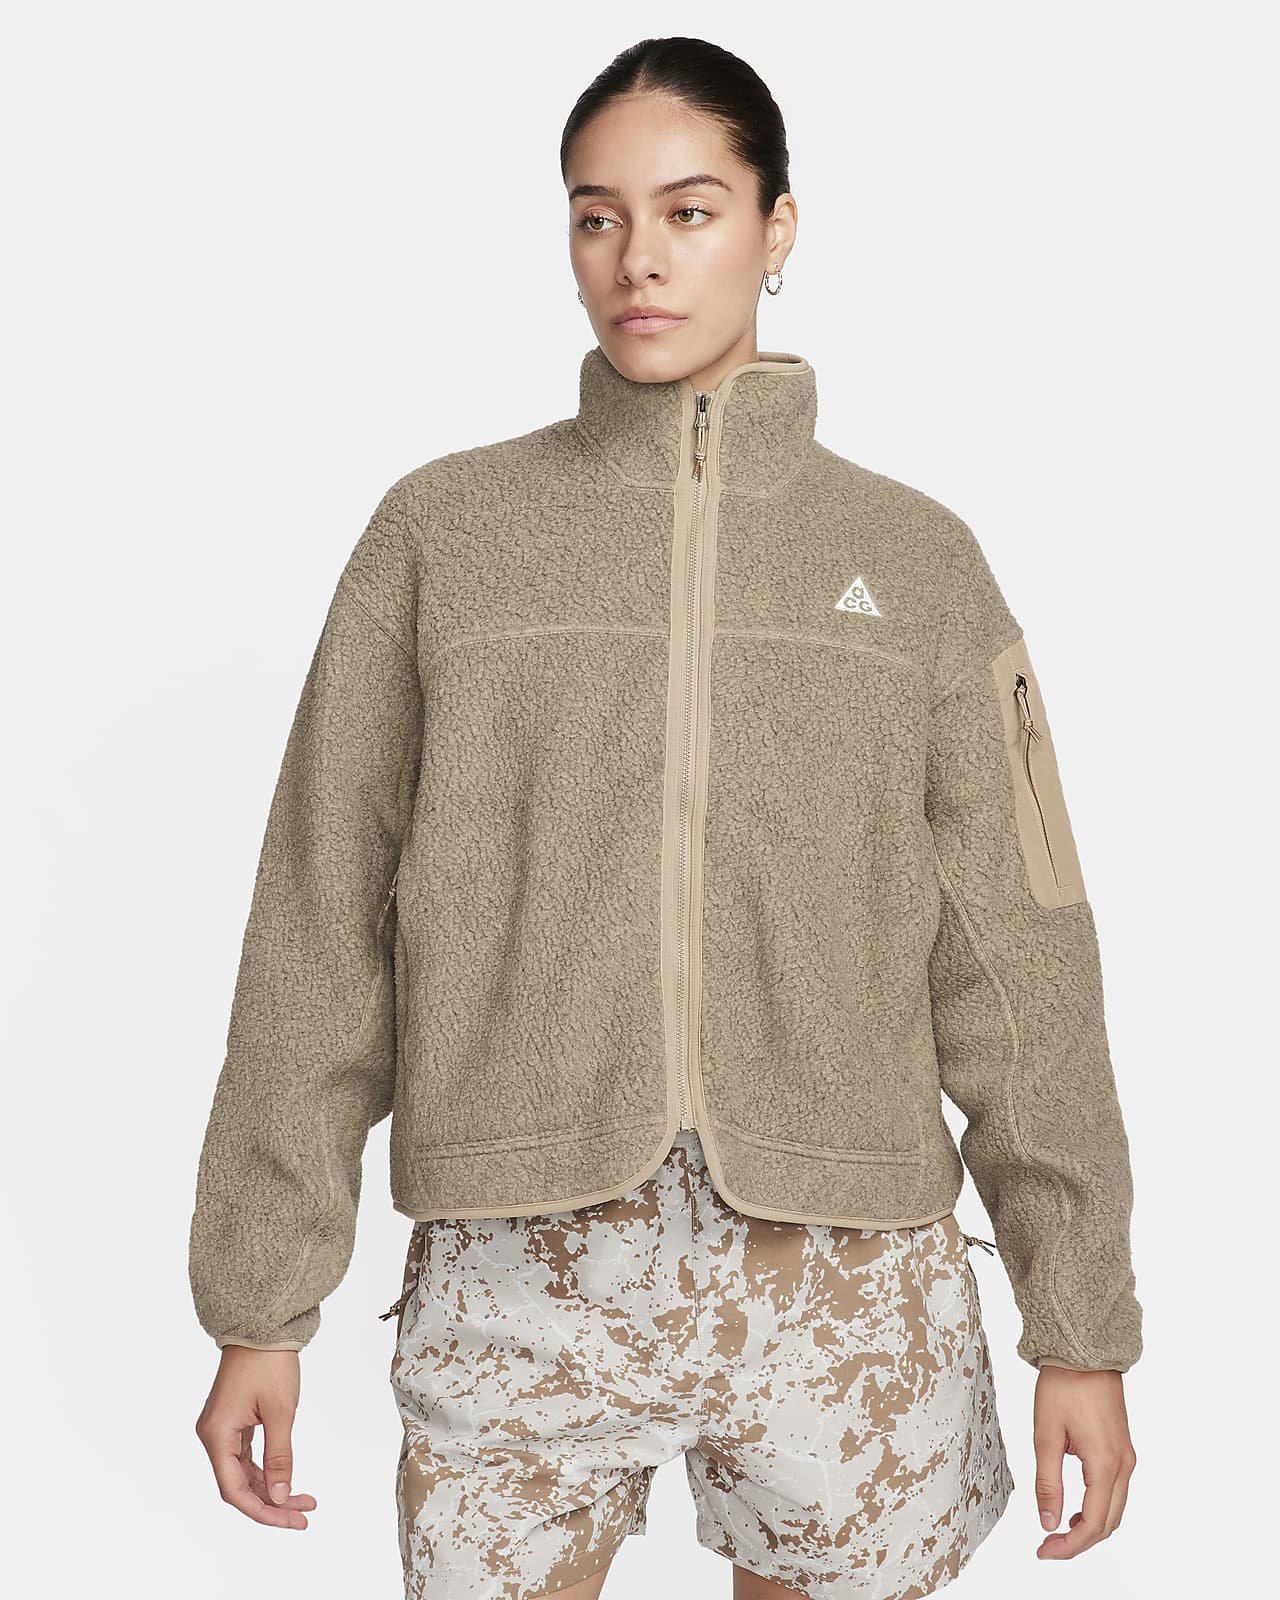 Veste Nike ACG « Arctic Wolf » Polartec® oversize à zip en tissu Fleece pour femme